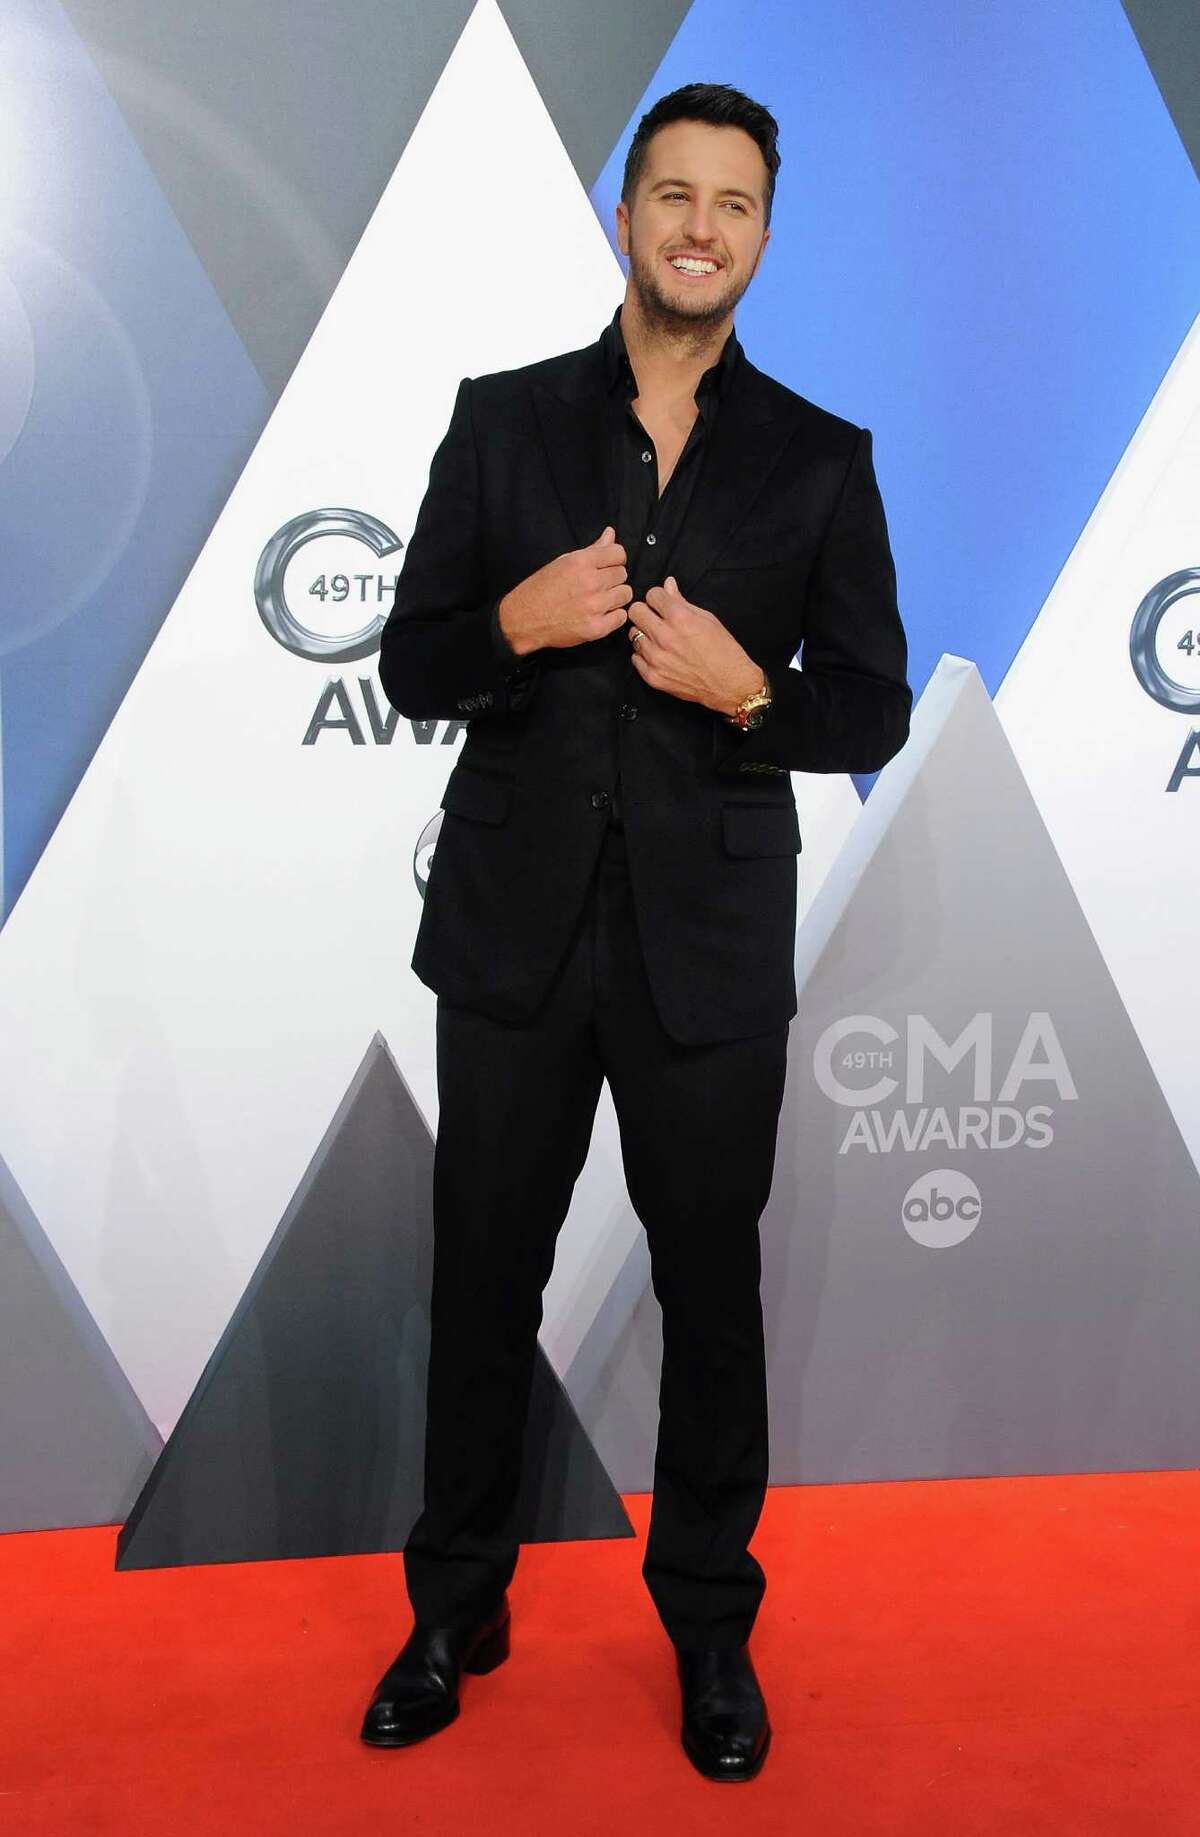 Musician Luke Bryan attends the 49th annual CMA Awards at the Bridgestone Arena on Nov. 4, 2015, in Nashville, Tennessee.